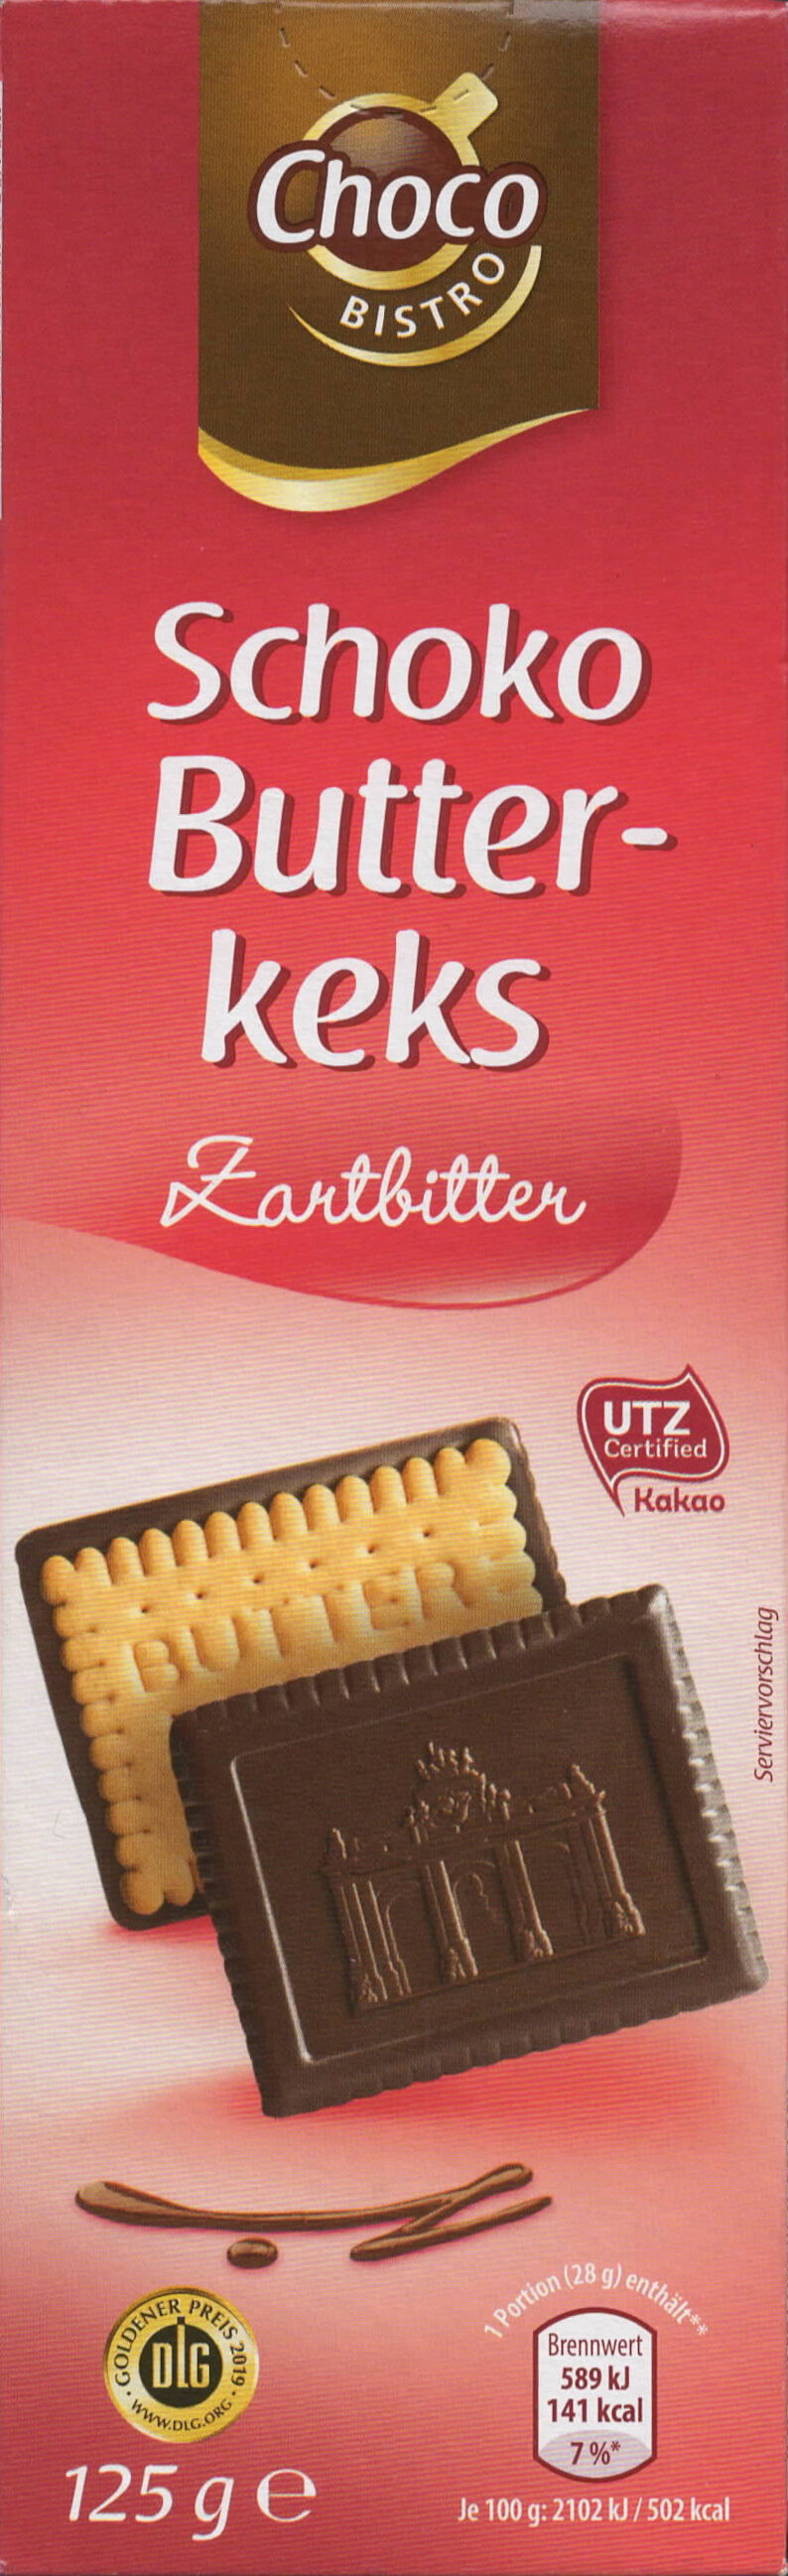 Schoko Butterkeks Zartbitter - Product - de